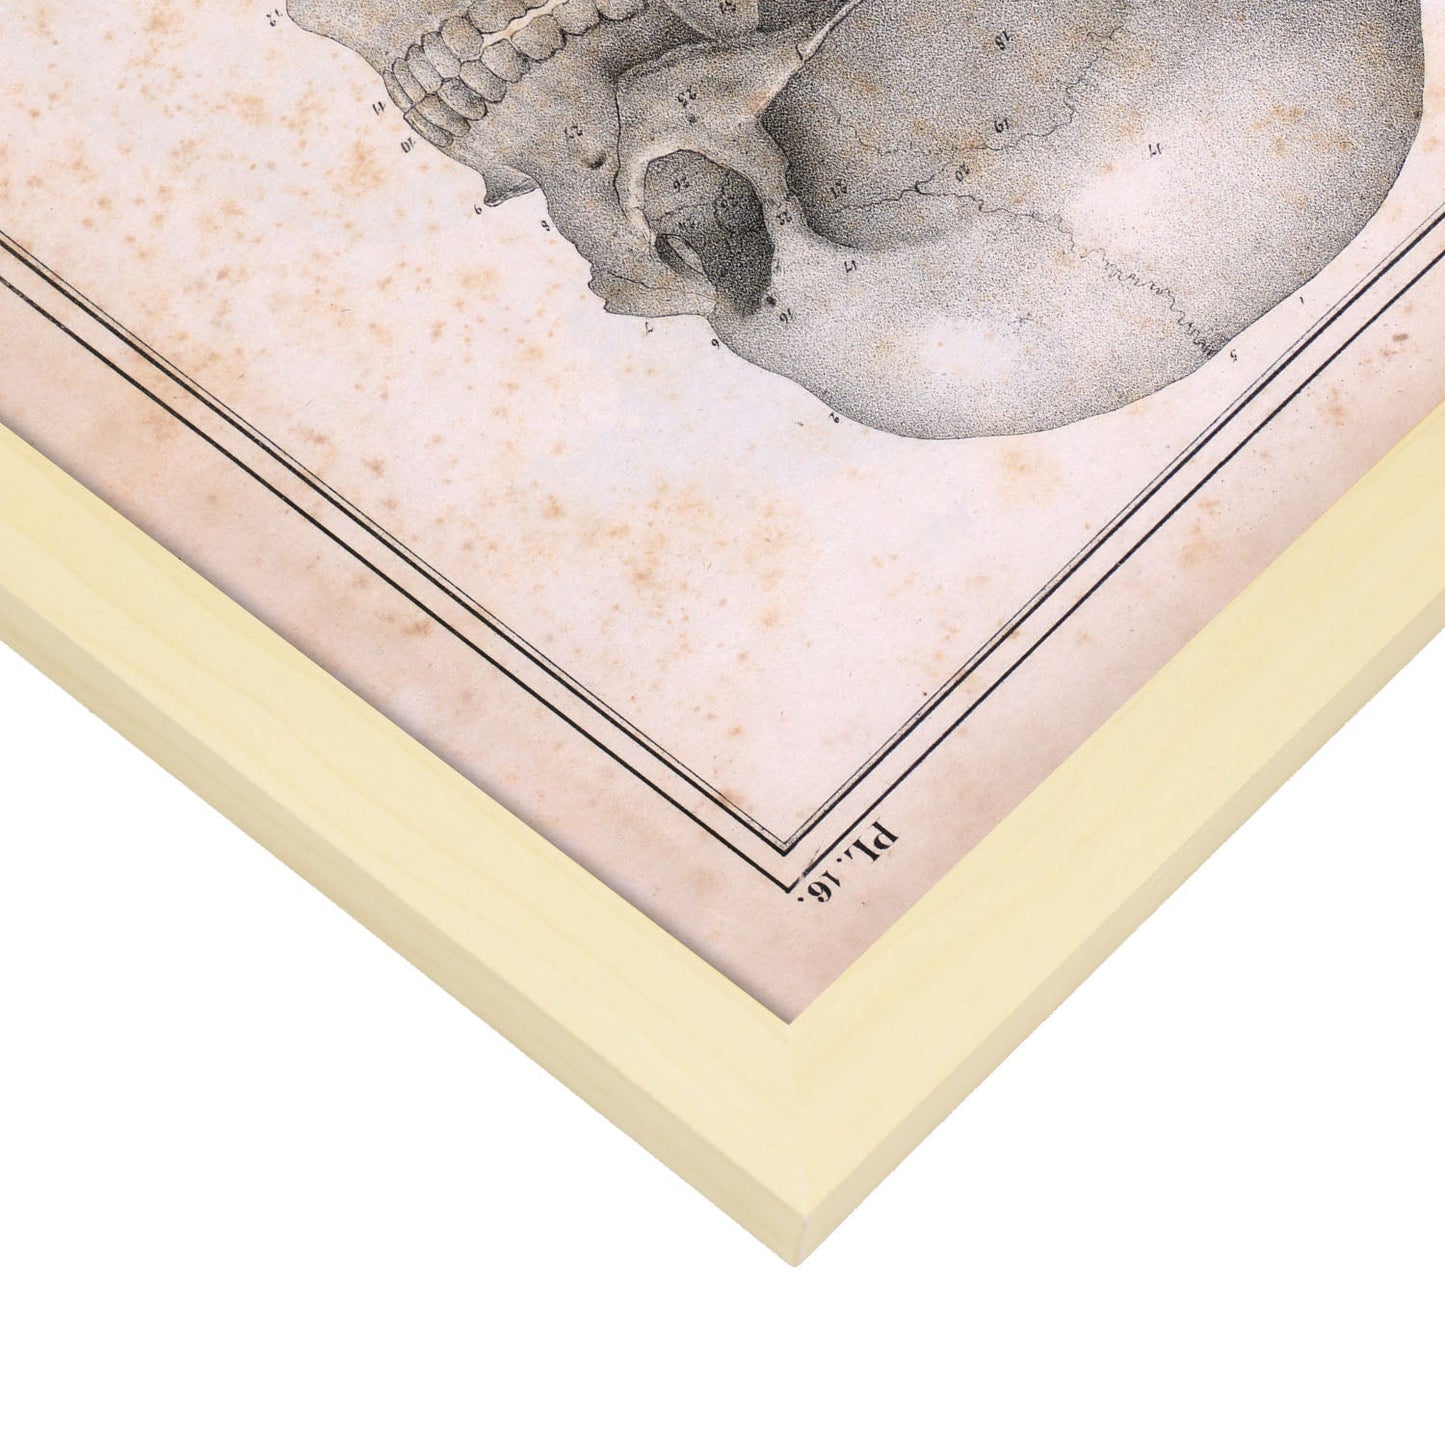 Paillou Sideview Skull-Artwork-Nacnic-Nacnic Estudio SL